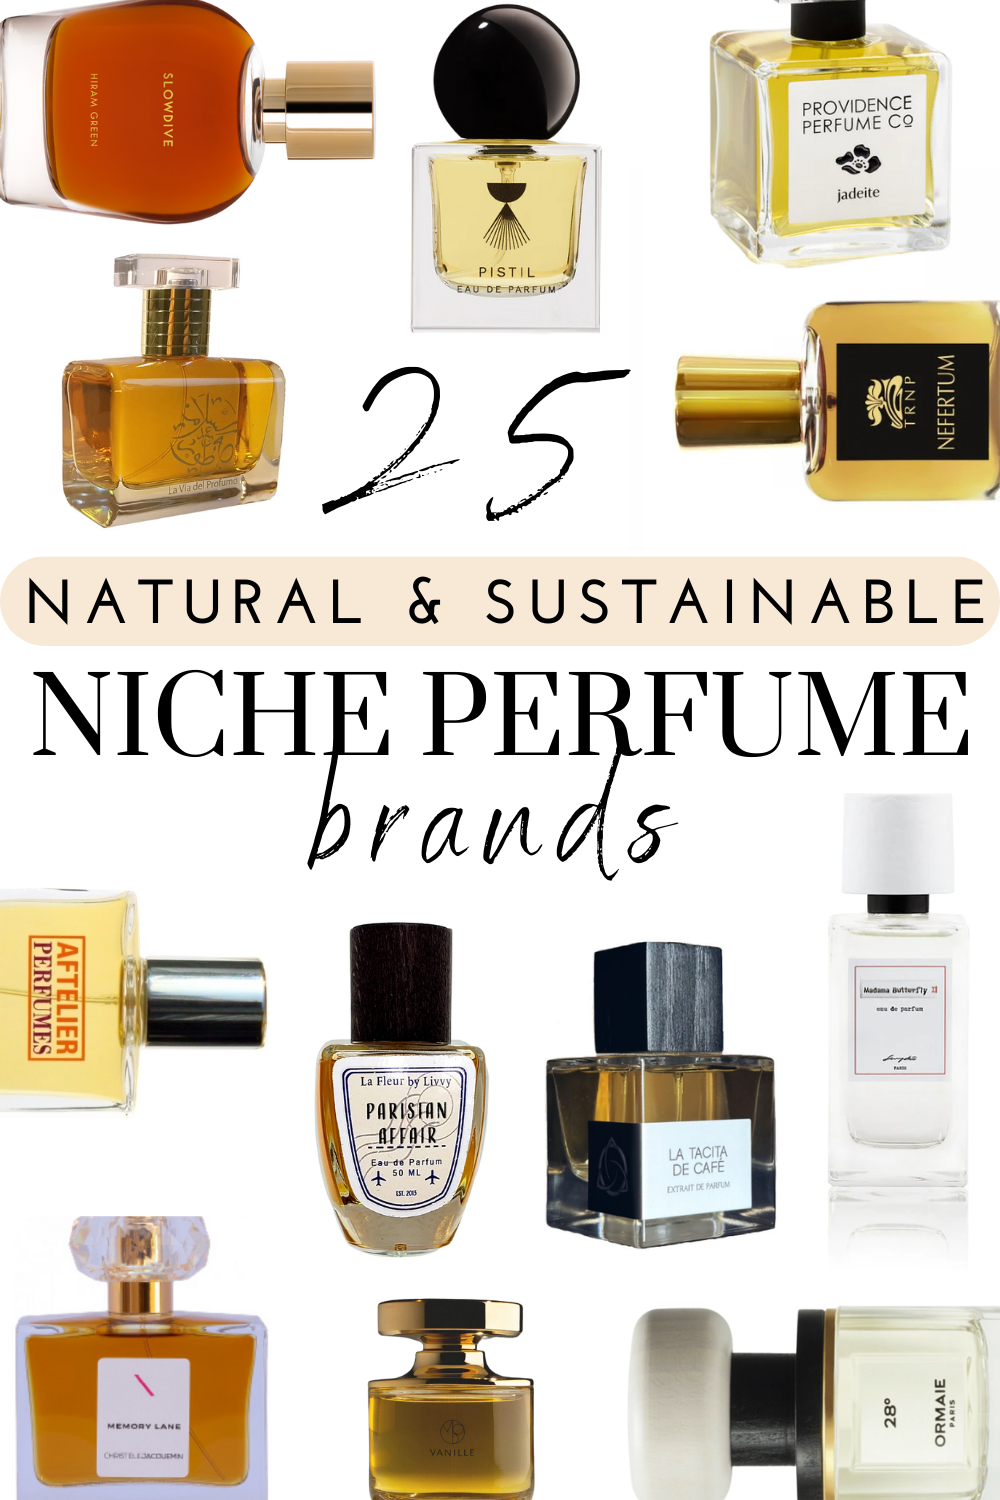 niche perfume brands natural